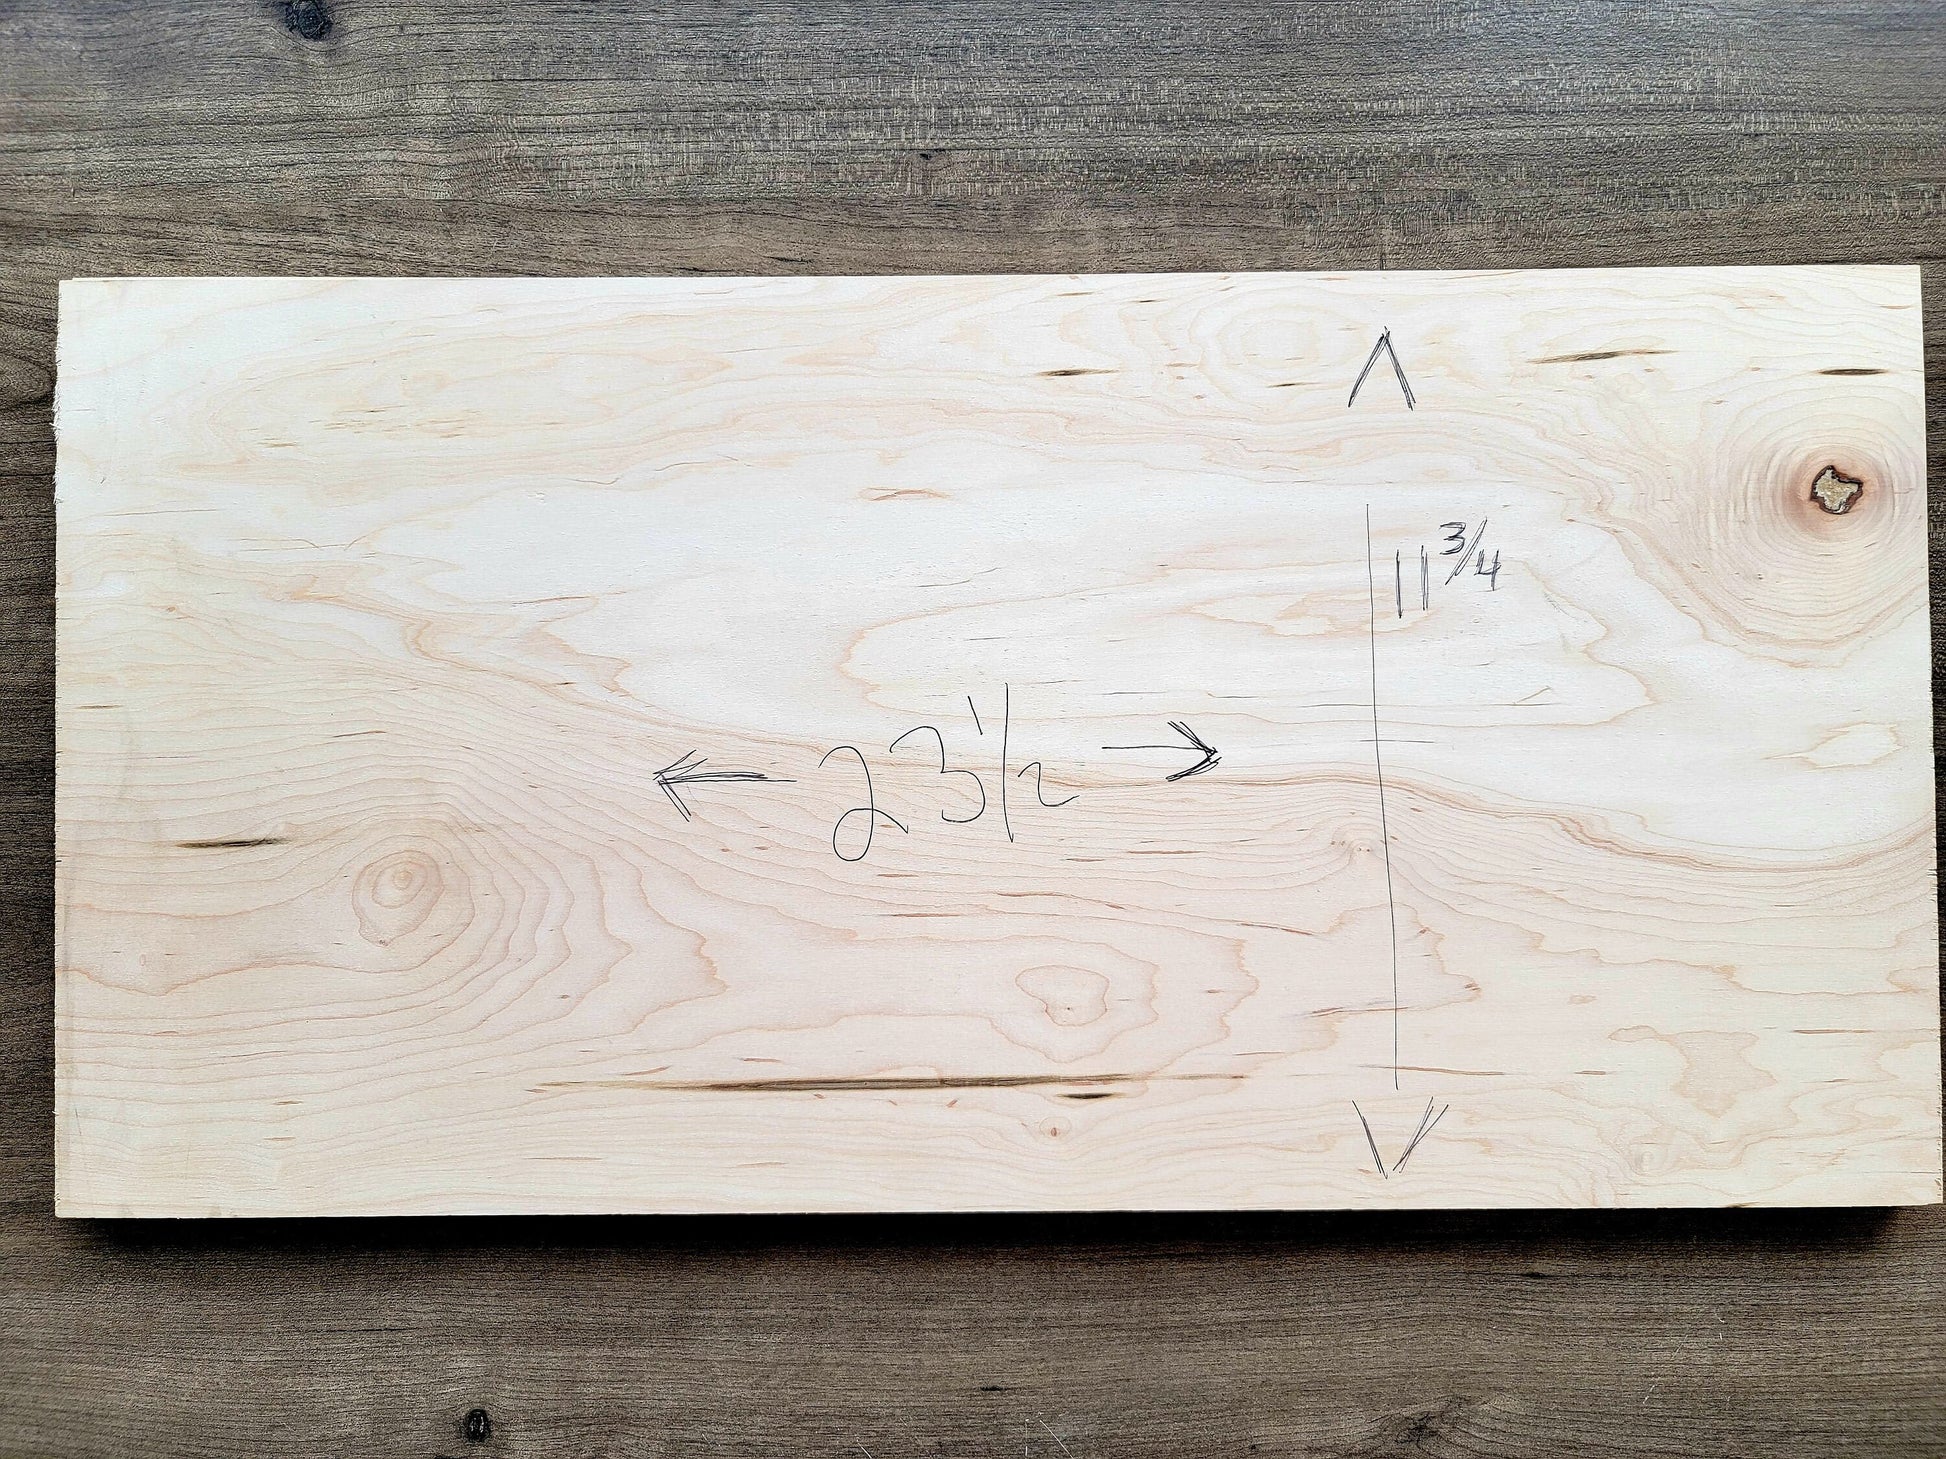 Making Wood Sign Blanks For Laser Engraving 